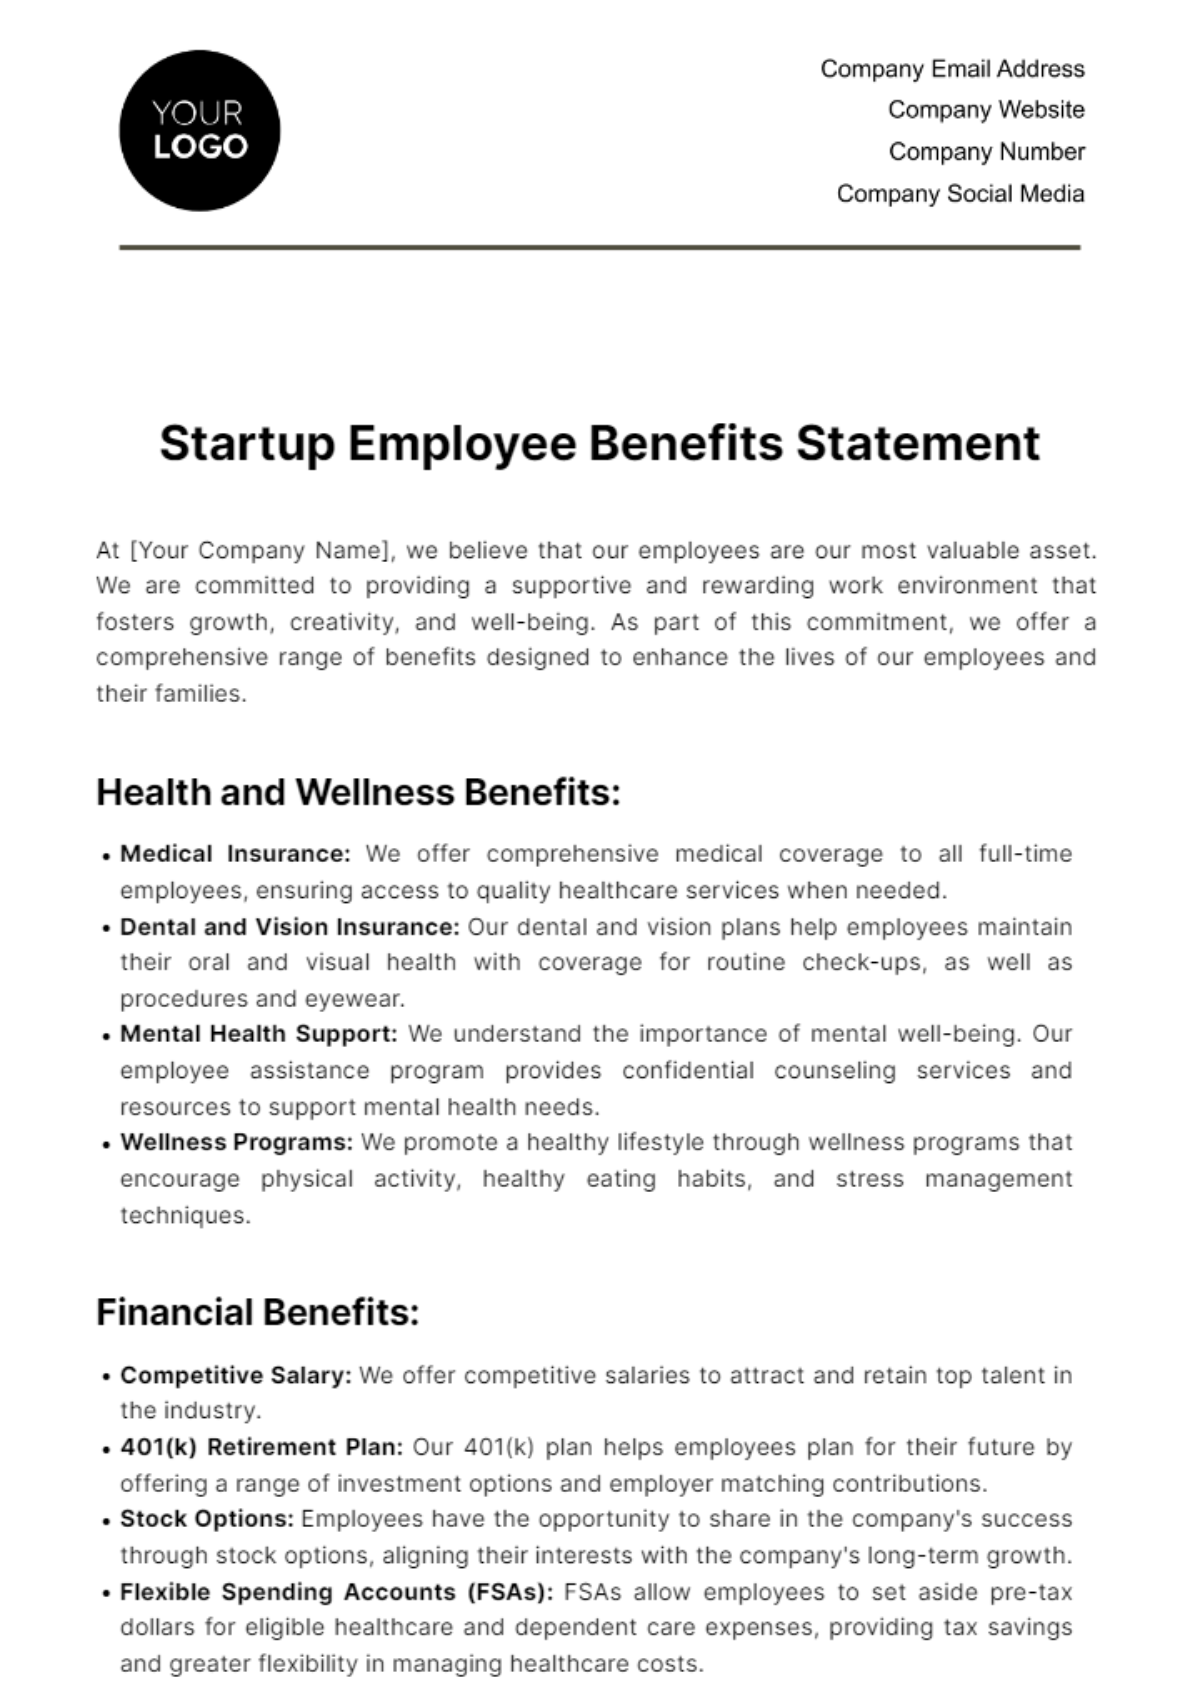 Startup Employee Benefits Statement Template